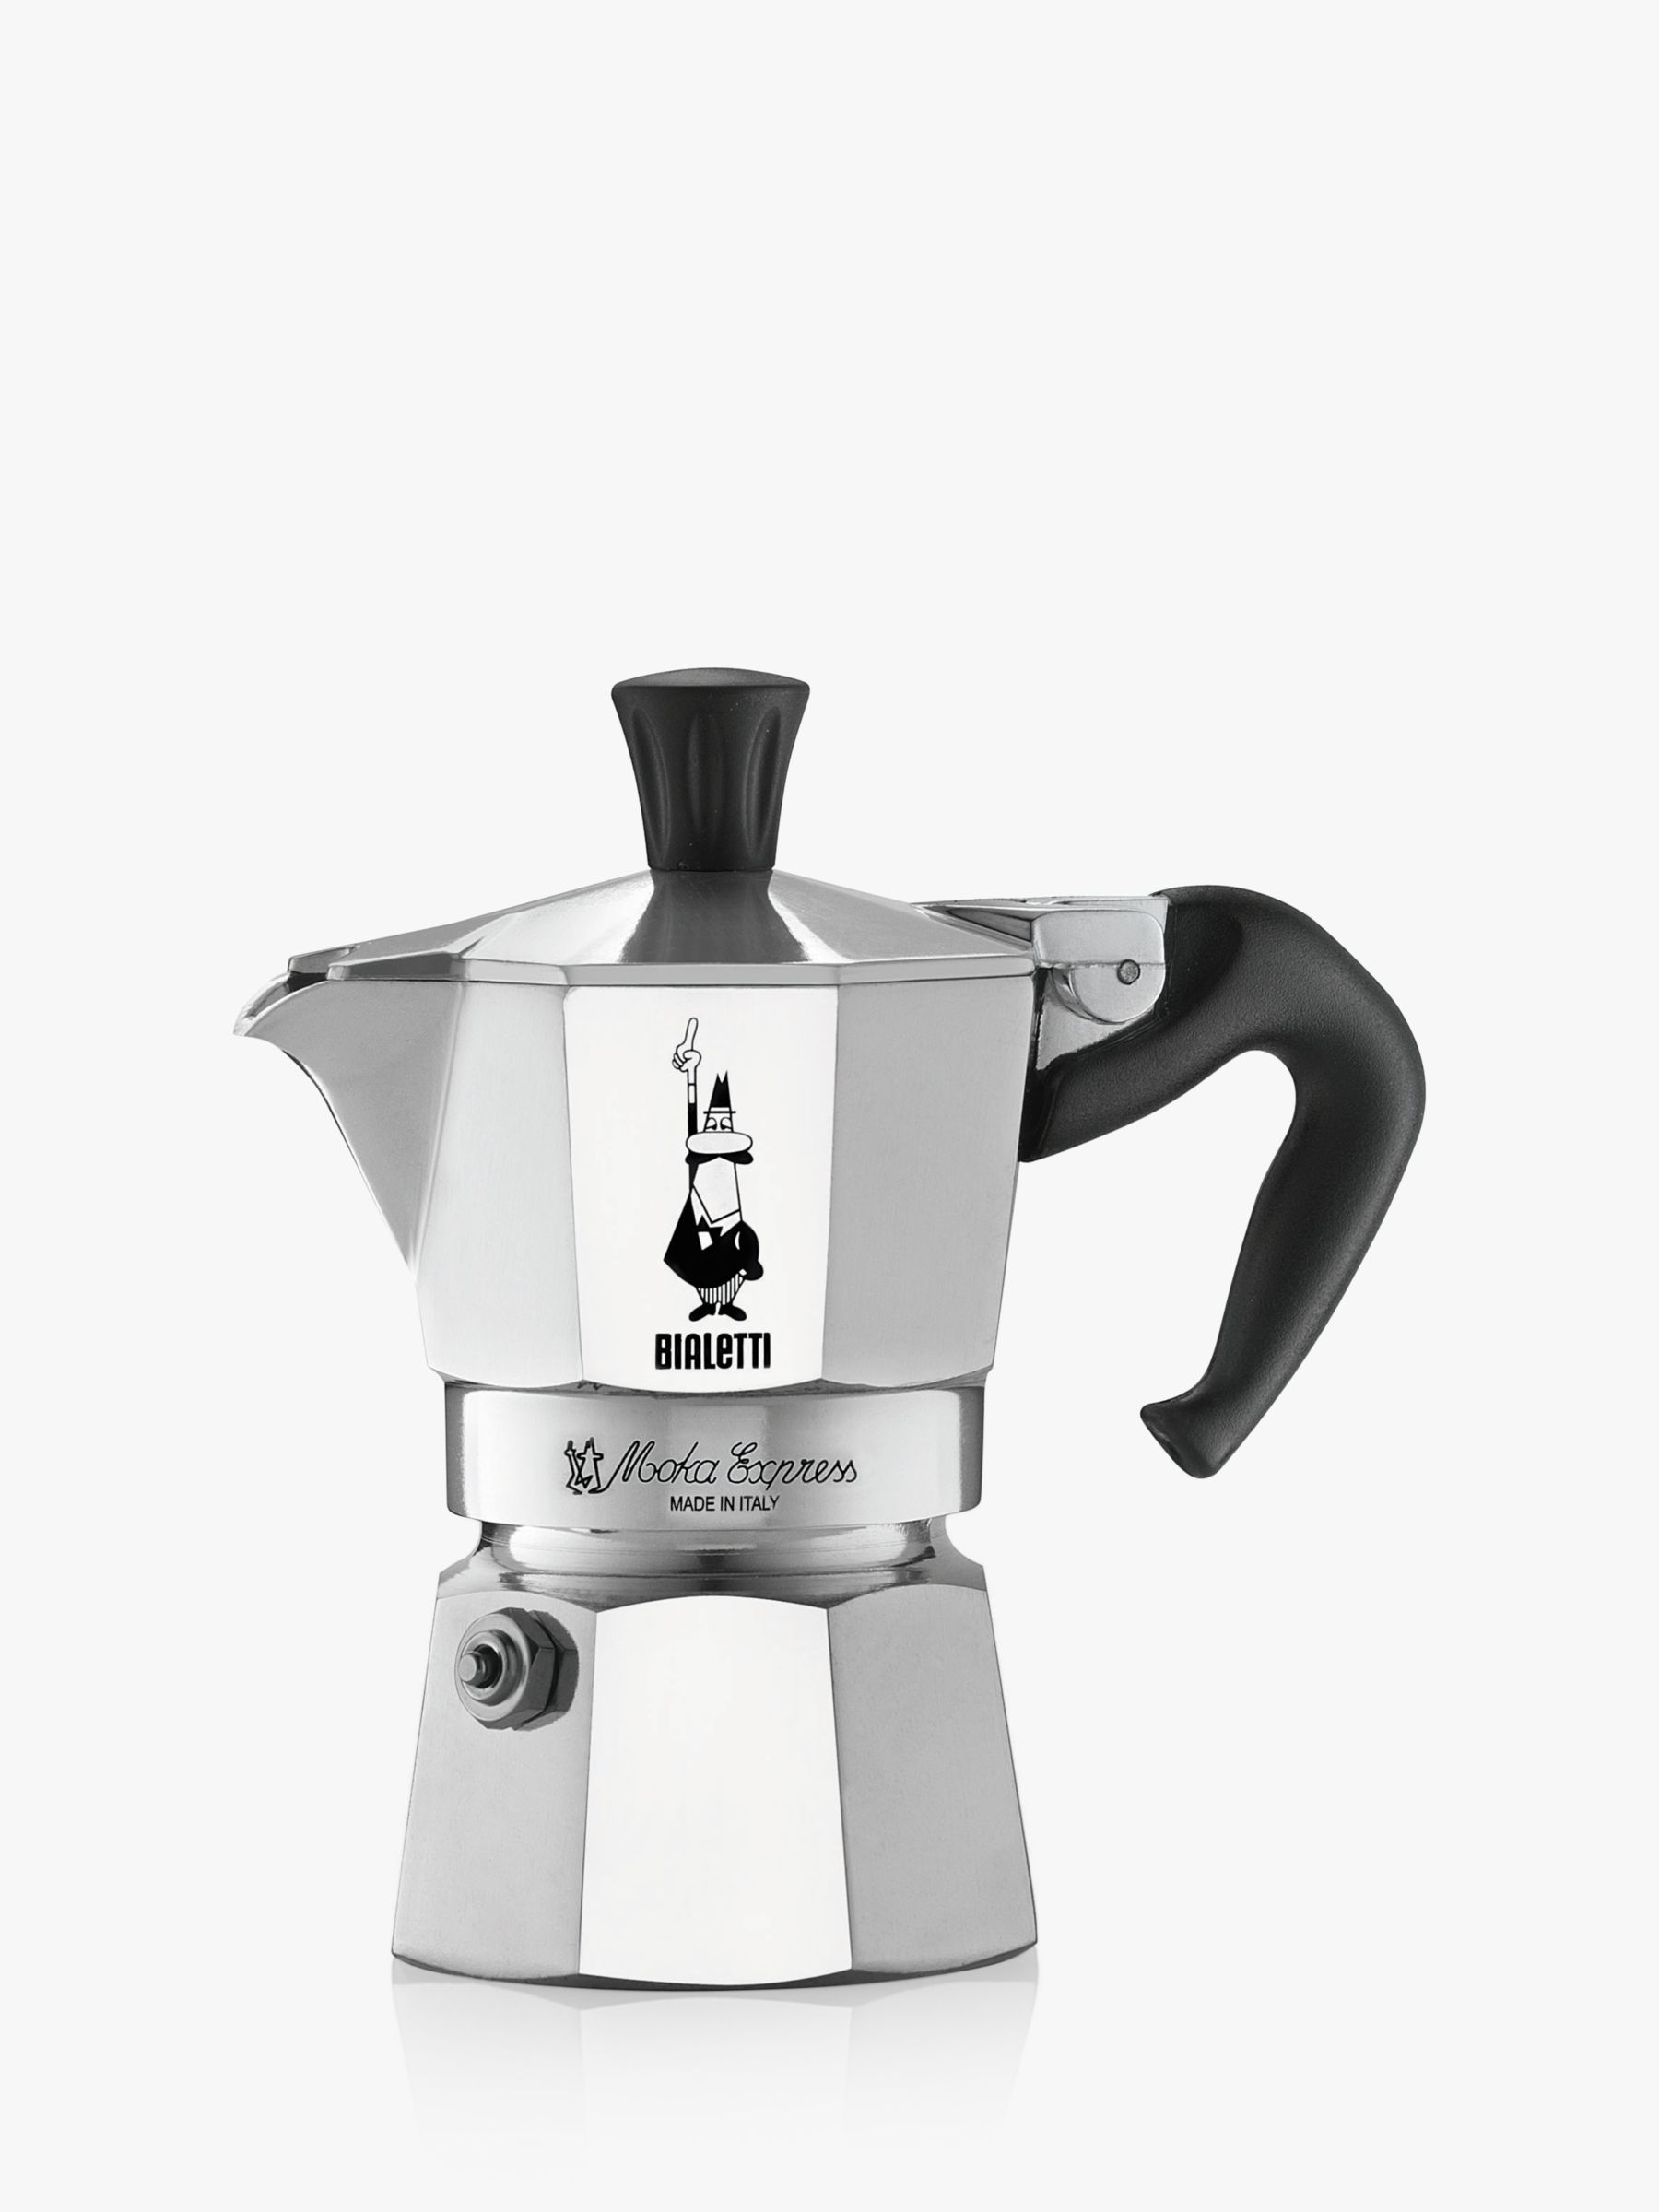 Bialetti Moka Express Hob Espresso Coffee Maker, 1 Cup